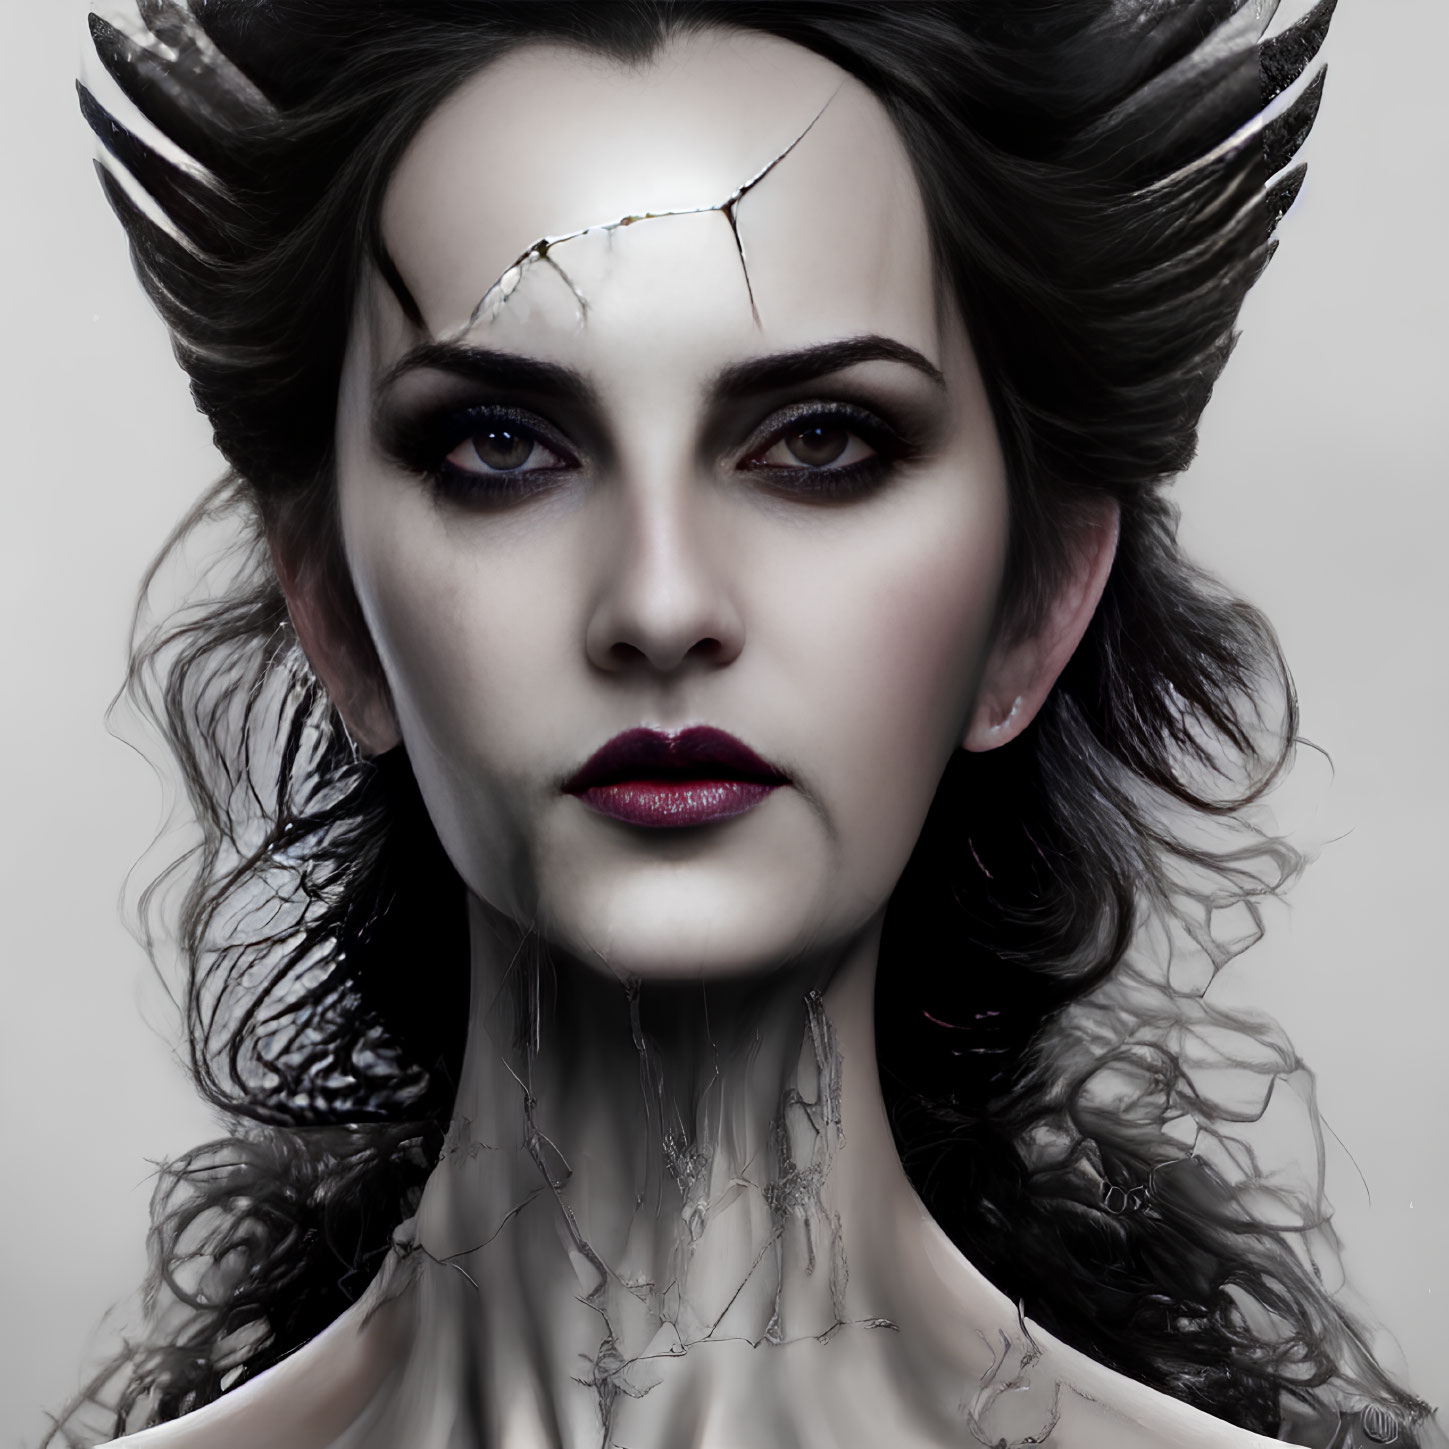 Portrait of Woman with Dark Eyes, Porcelain Skin, Cheekbones, and Horns